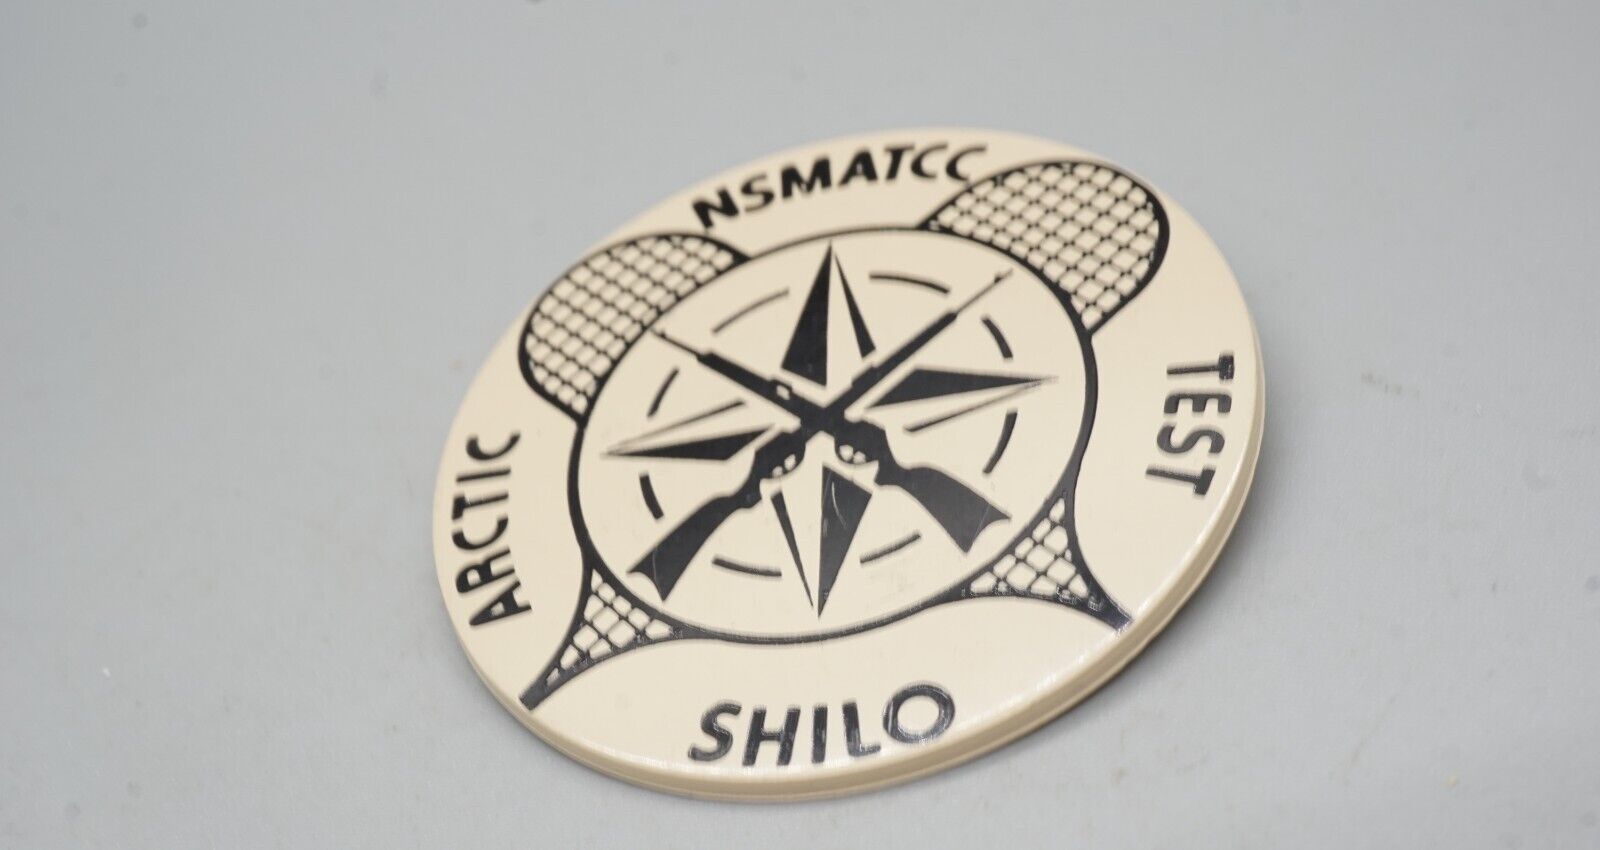 Vintage NATO NSMATCC Arctic Test Shilo Numbered Badge VERY RARE